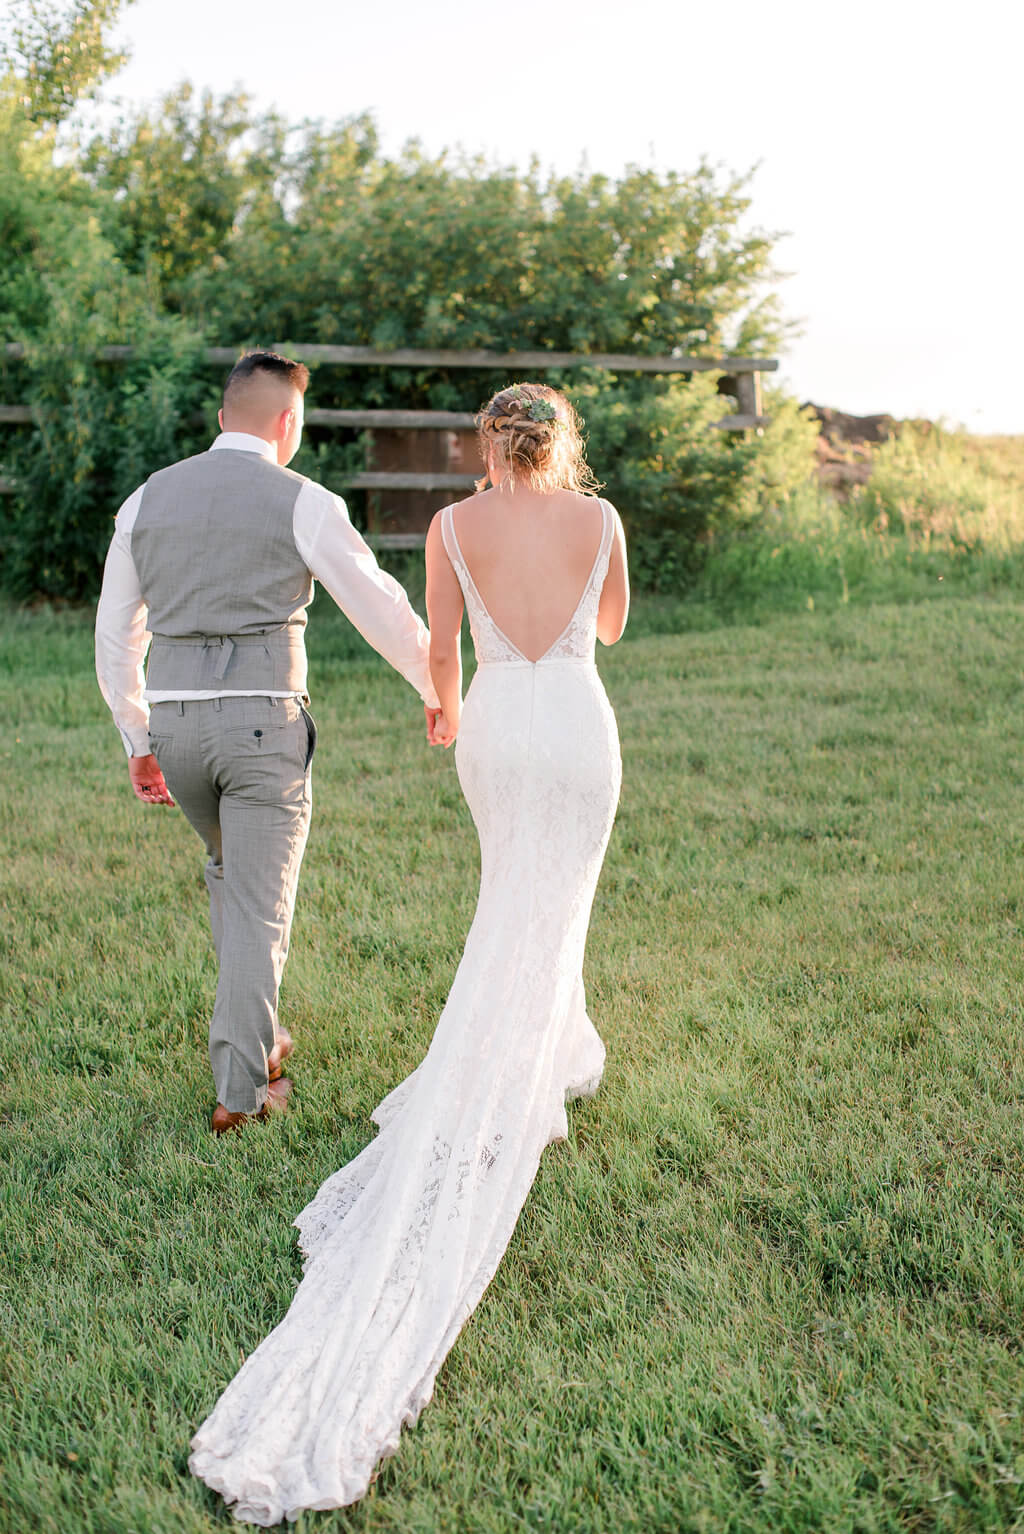 A bride and groom enjoying a farm wedding, walking through a field at sunset.